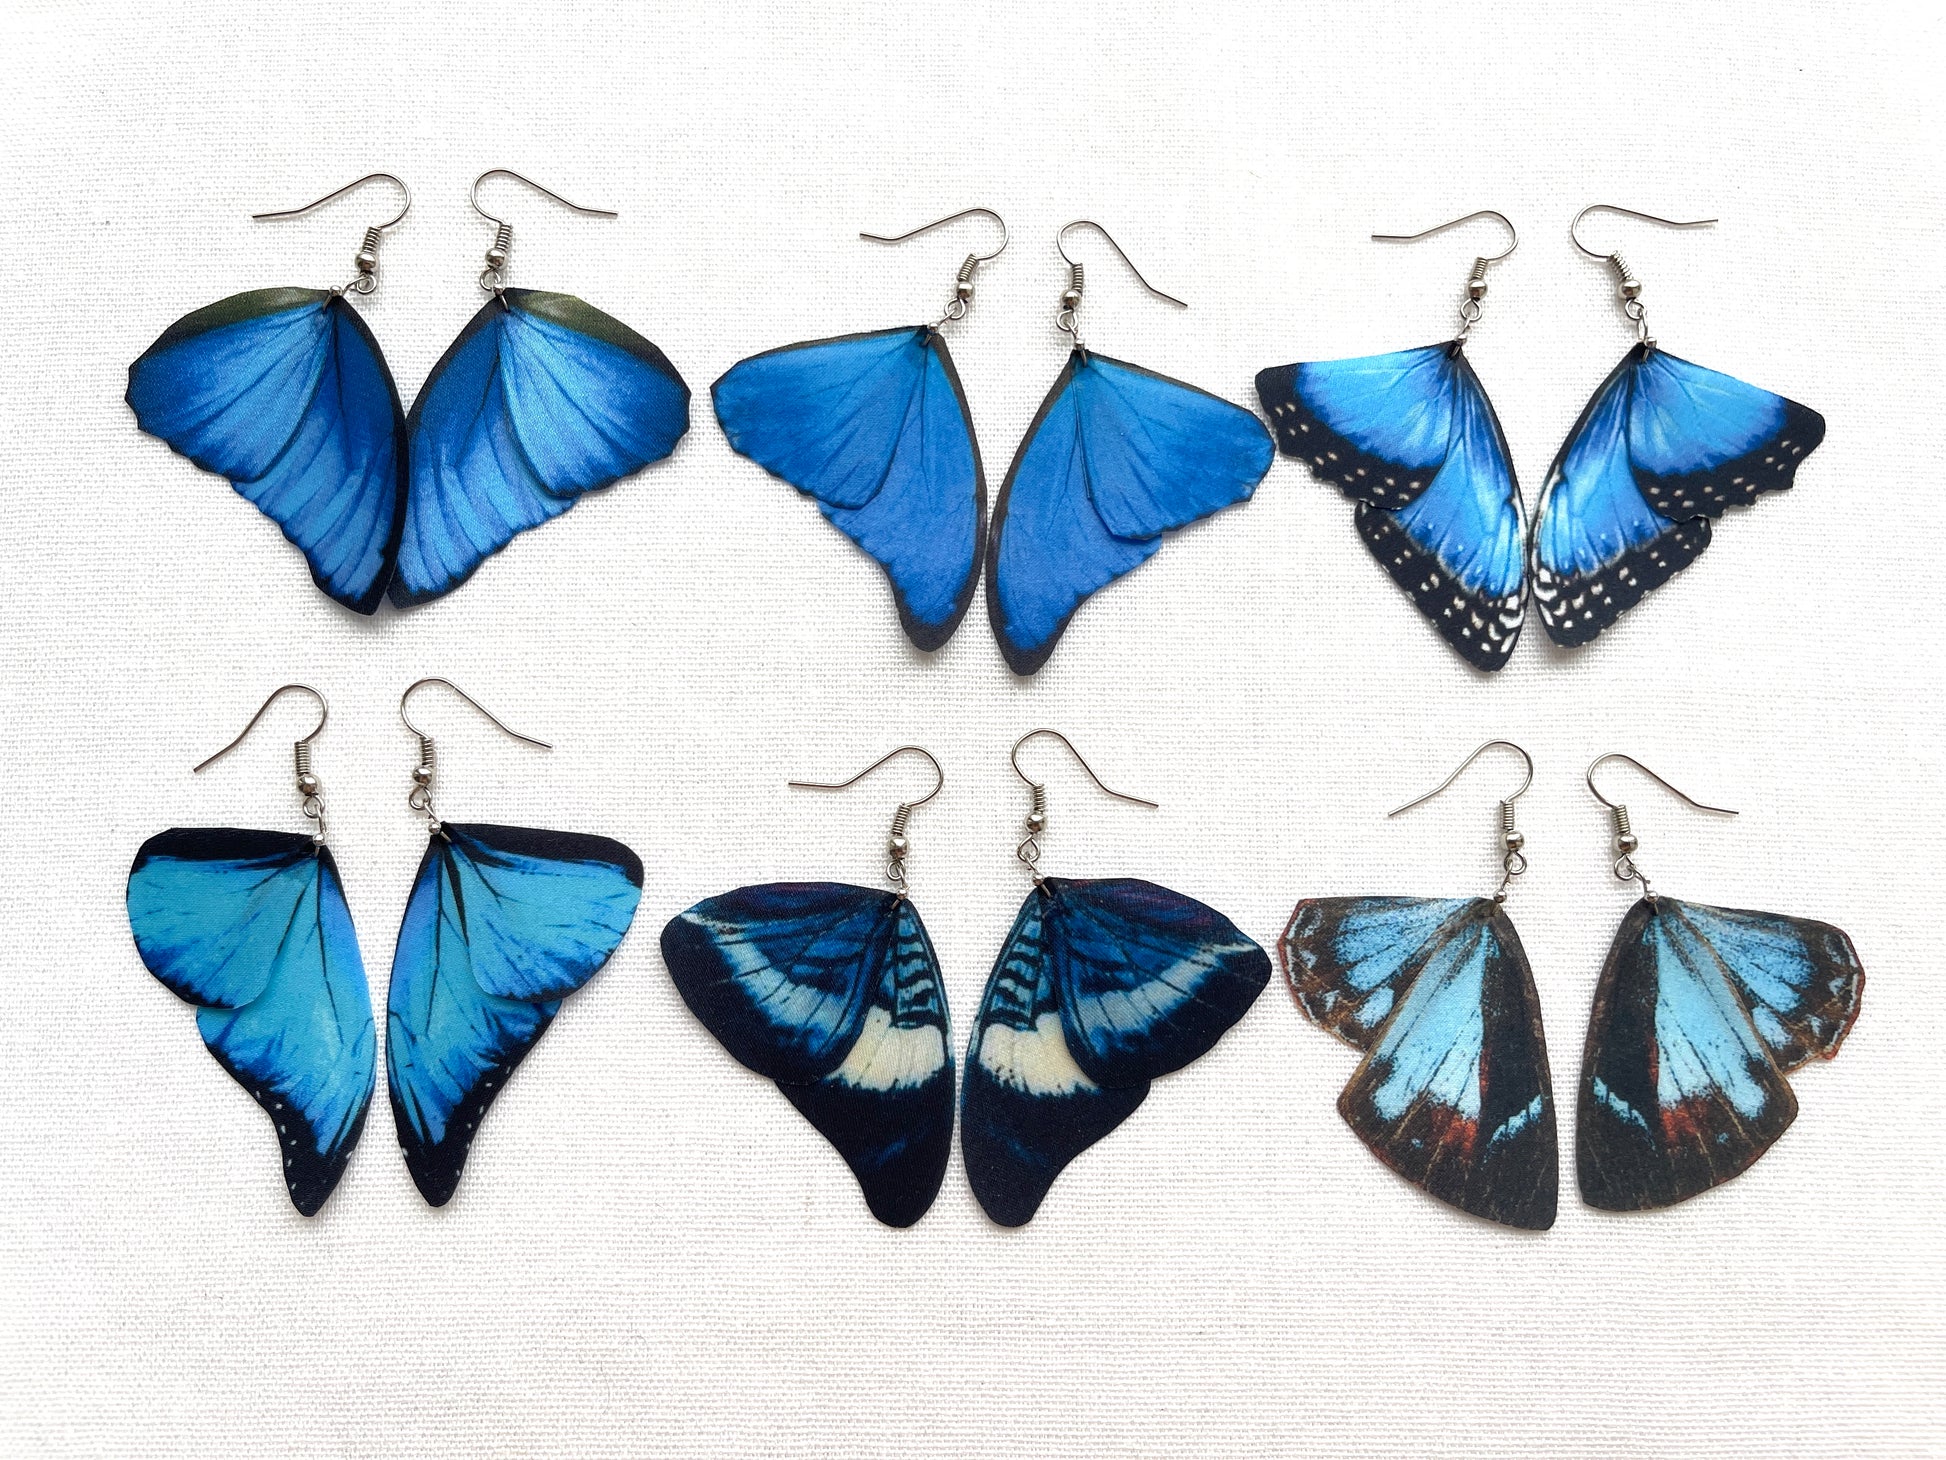 Boho-style fairy wing earrings in shades of blue